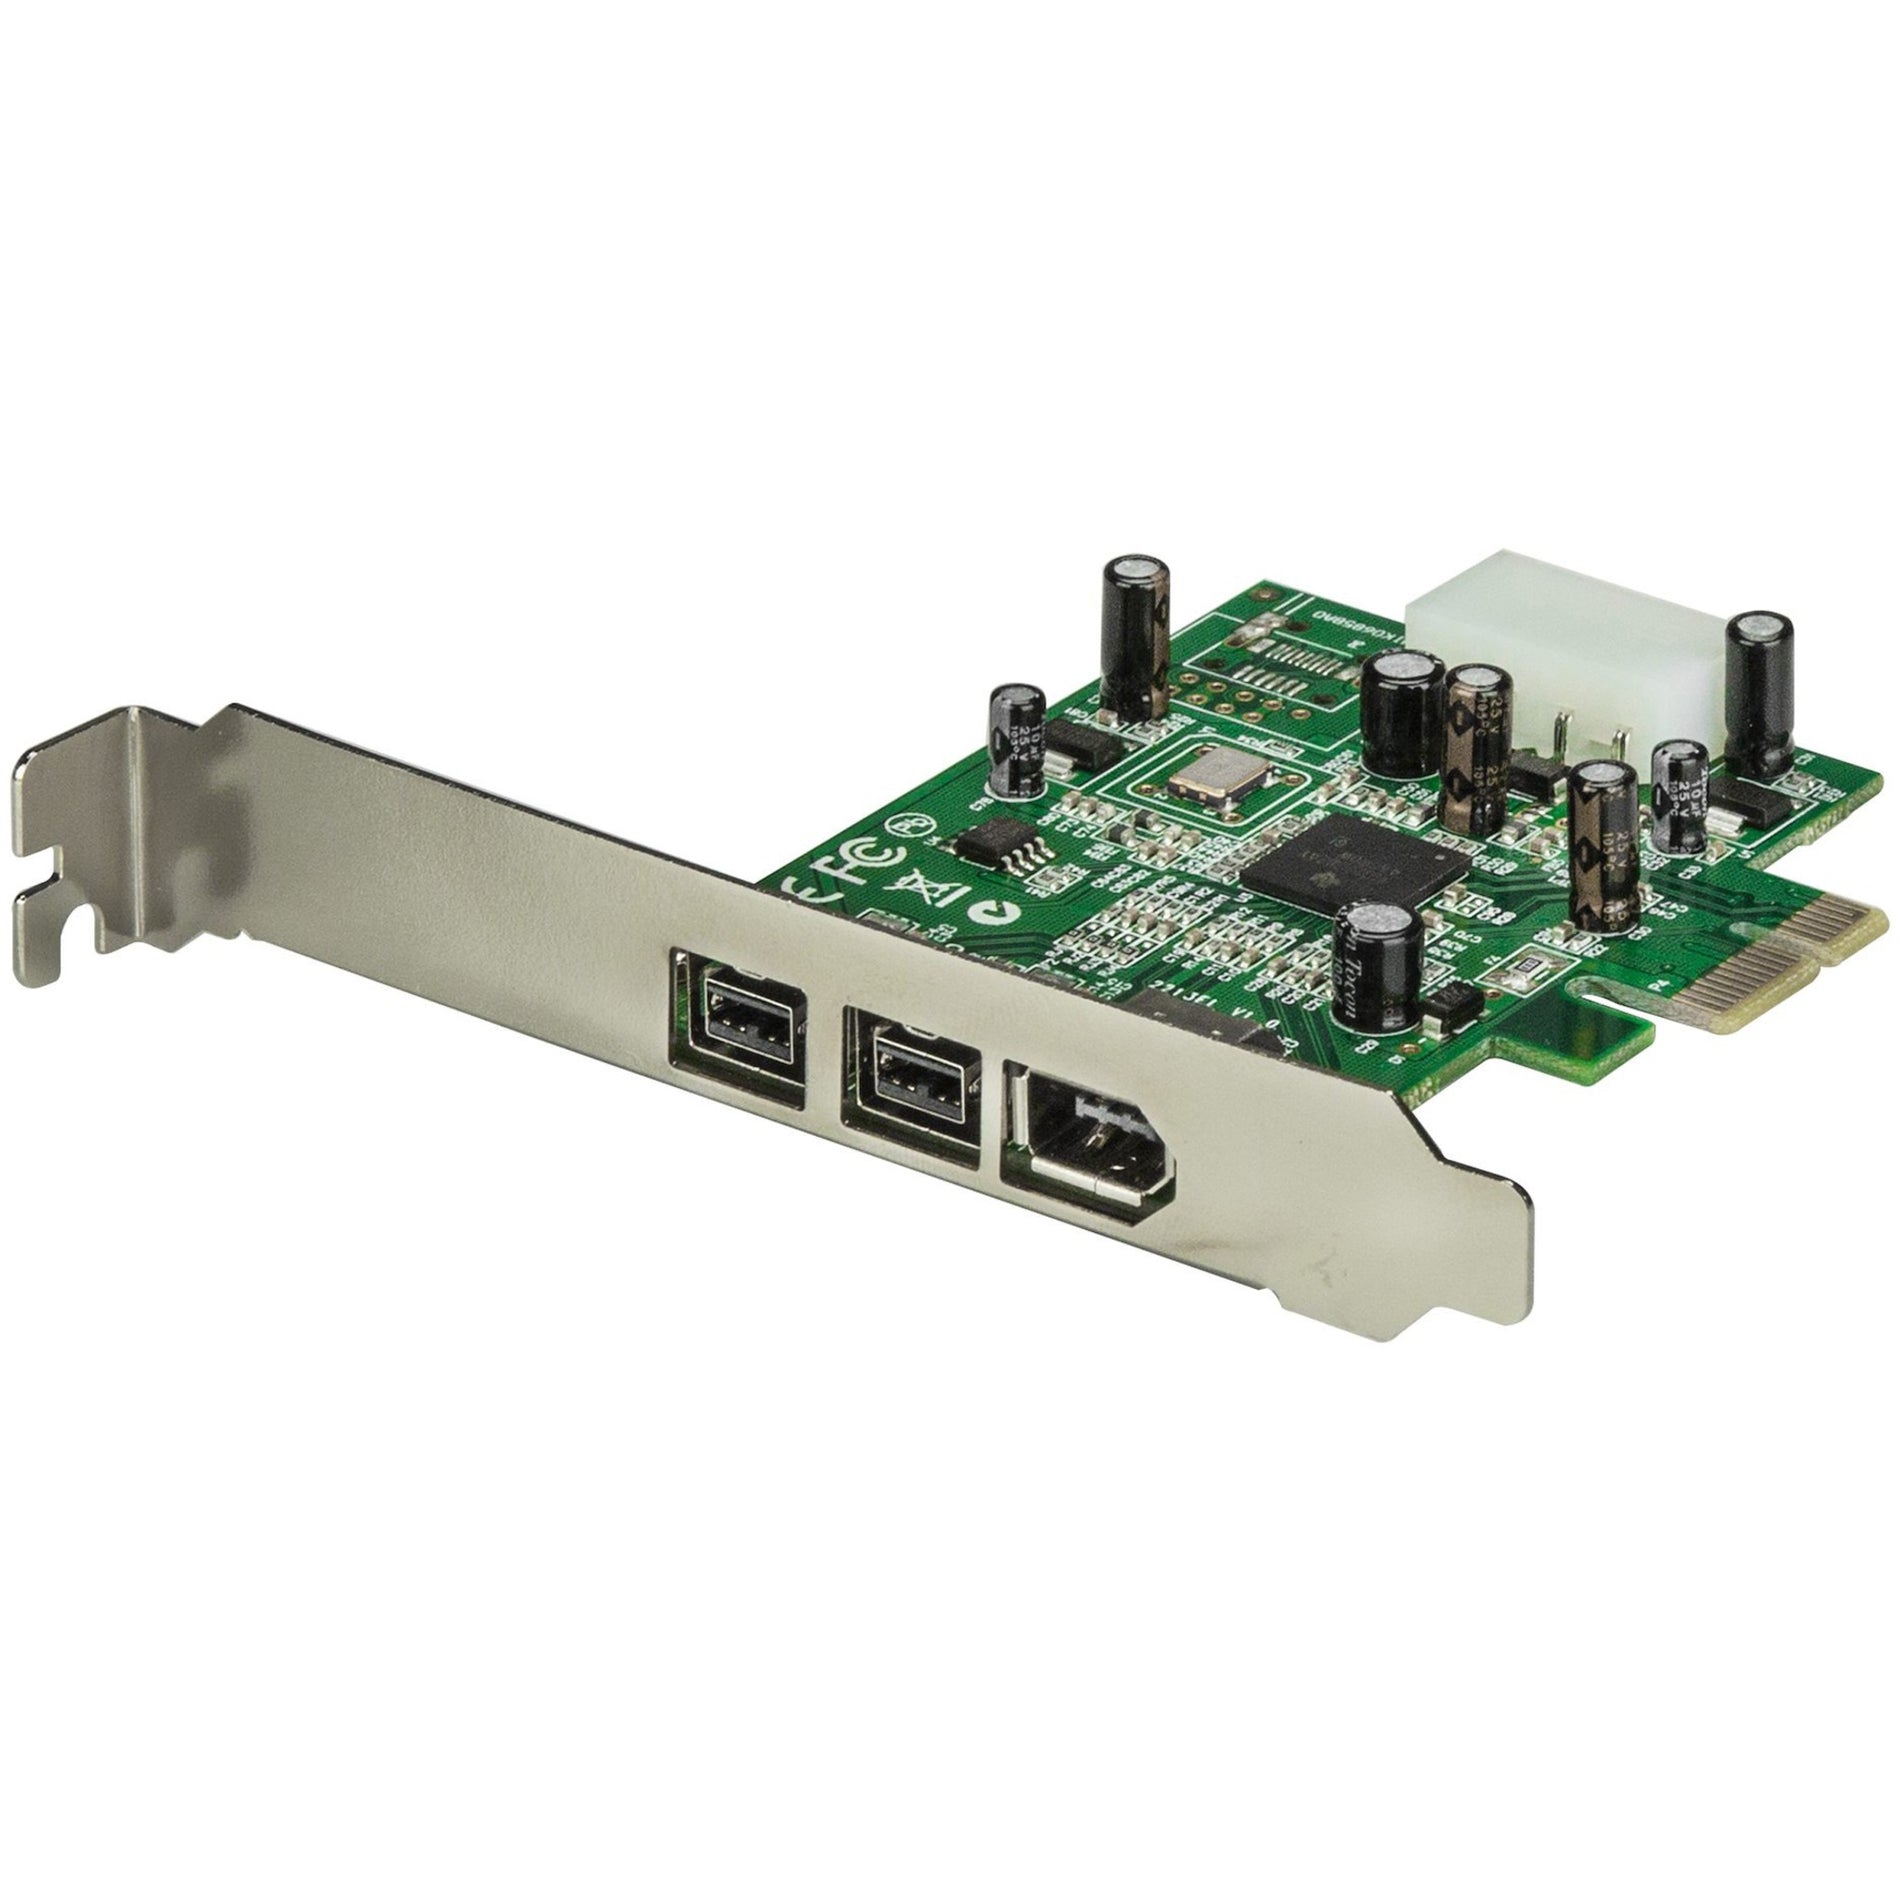 StarTech.com PEX1394B3 3 Port 2b 1a 1394 PCI Express FireWire Card Adapter, High-Speed Data Transfer and Easy Connectivity